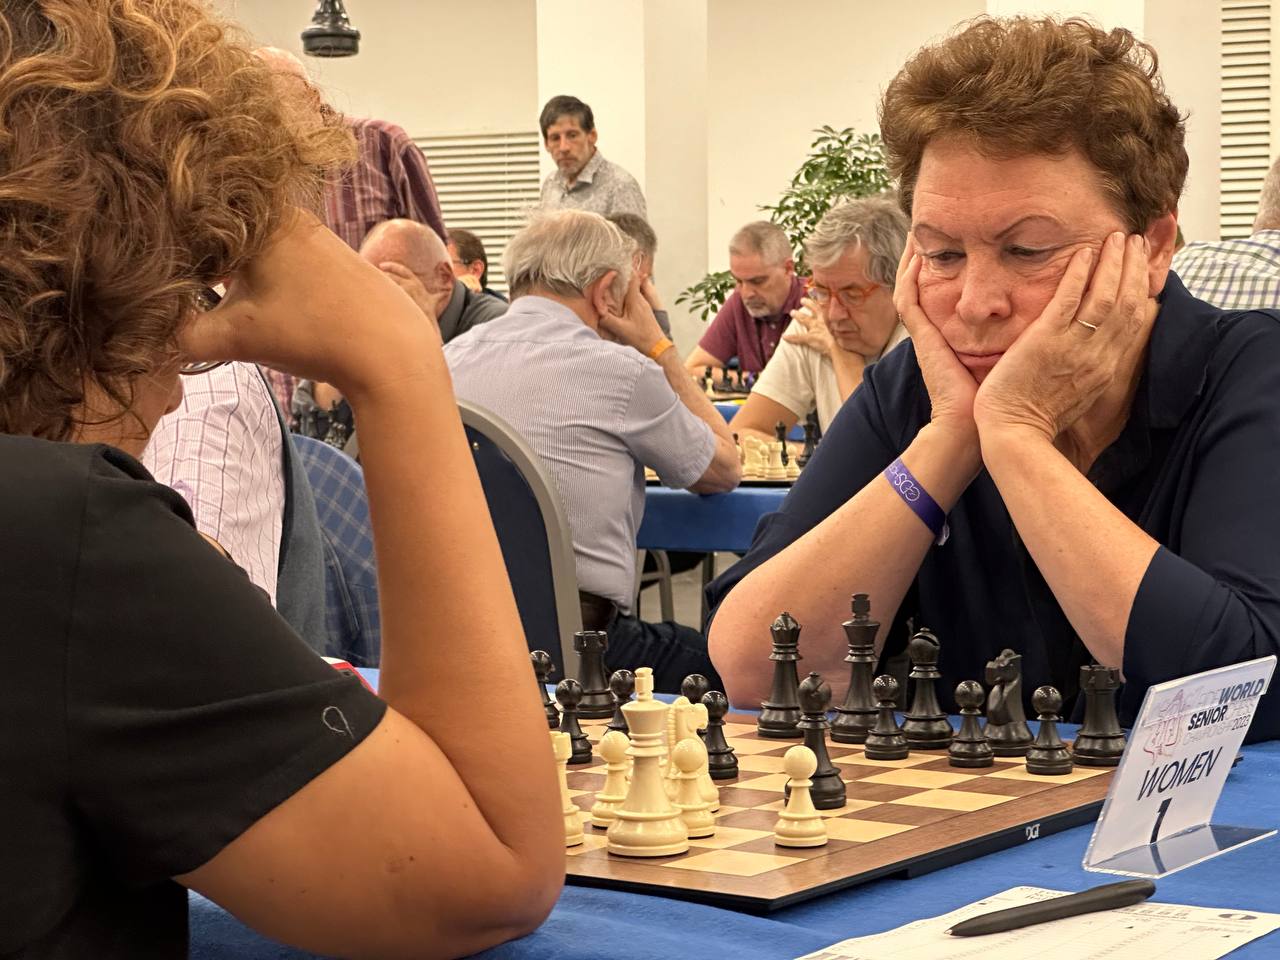 FIDE Commission for Women's Chess – FIDE Commission for Women's Chess